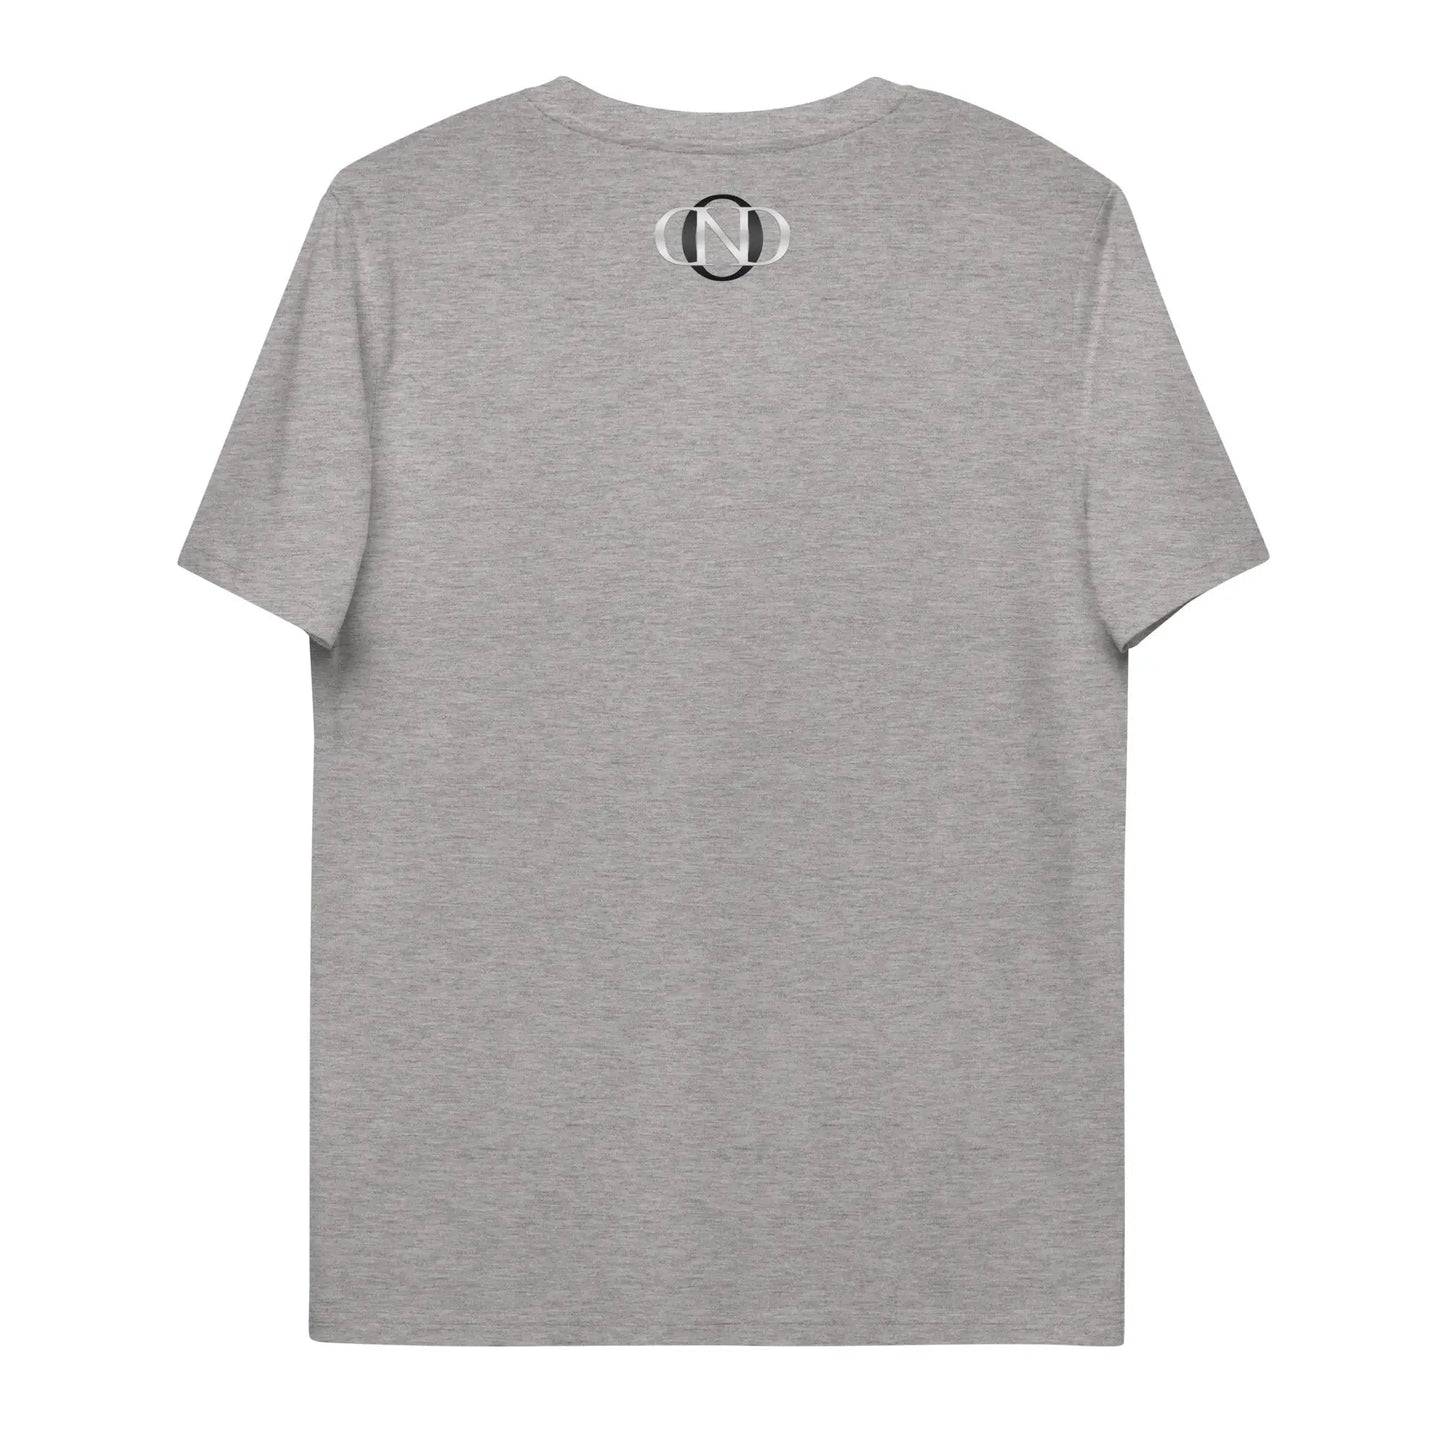 22 Neduz Designs Unisex Socialliberalerna T-Shirt - 100%